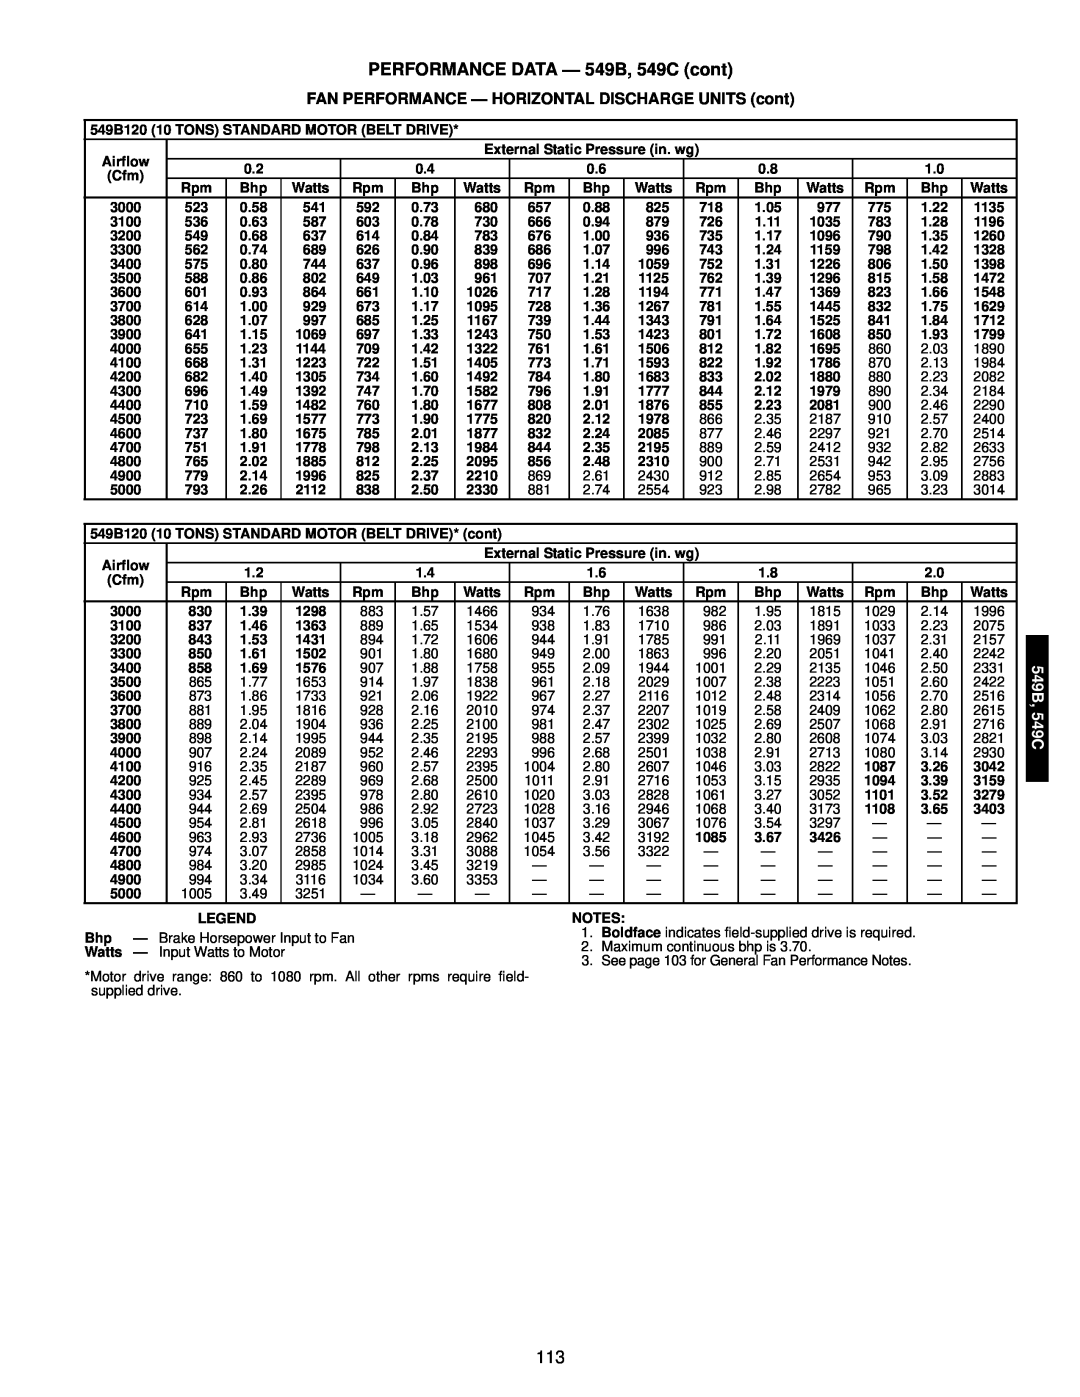 Bryant manual PERFORMANCE DATA - 549B, 549C cont, FAN PERFORMANCE — HORIZONTAL DISCHARGE UNITS cont 